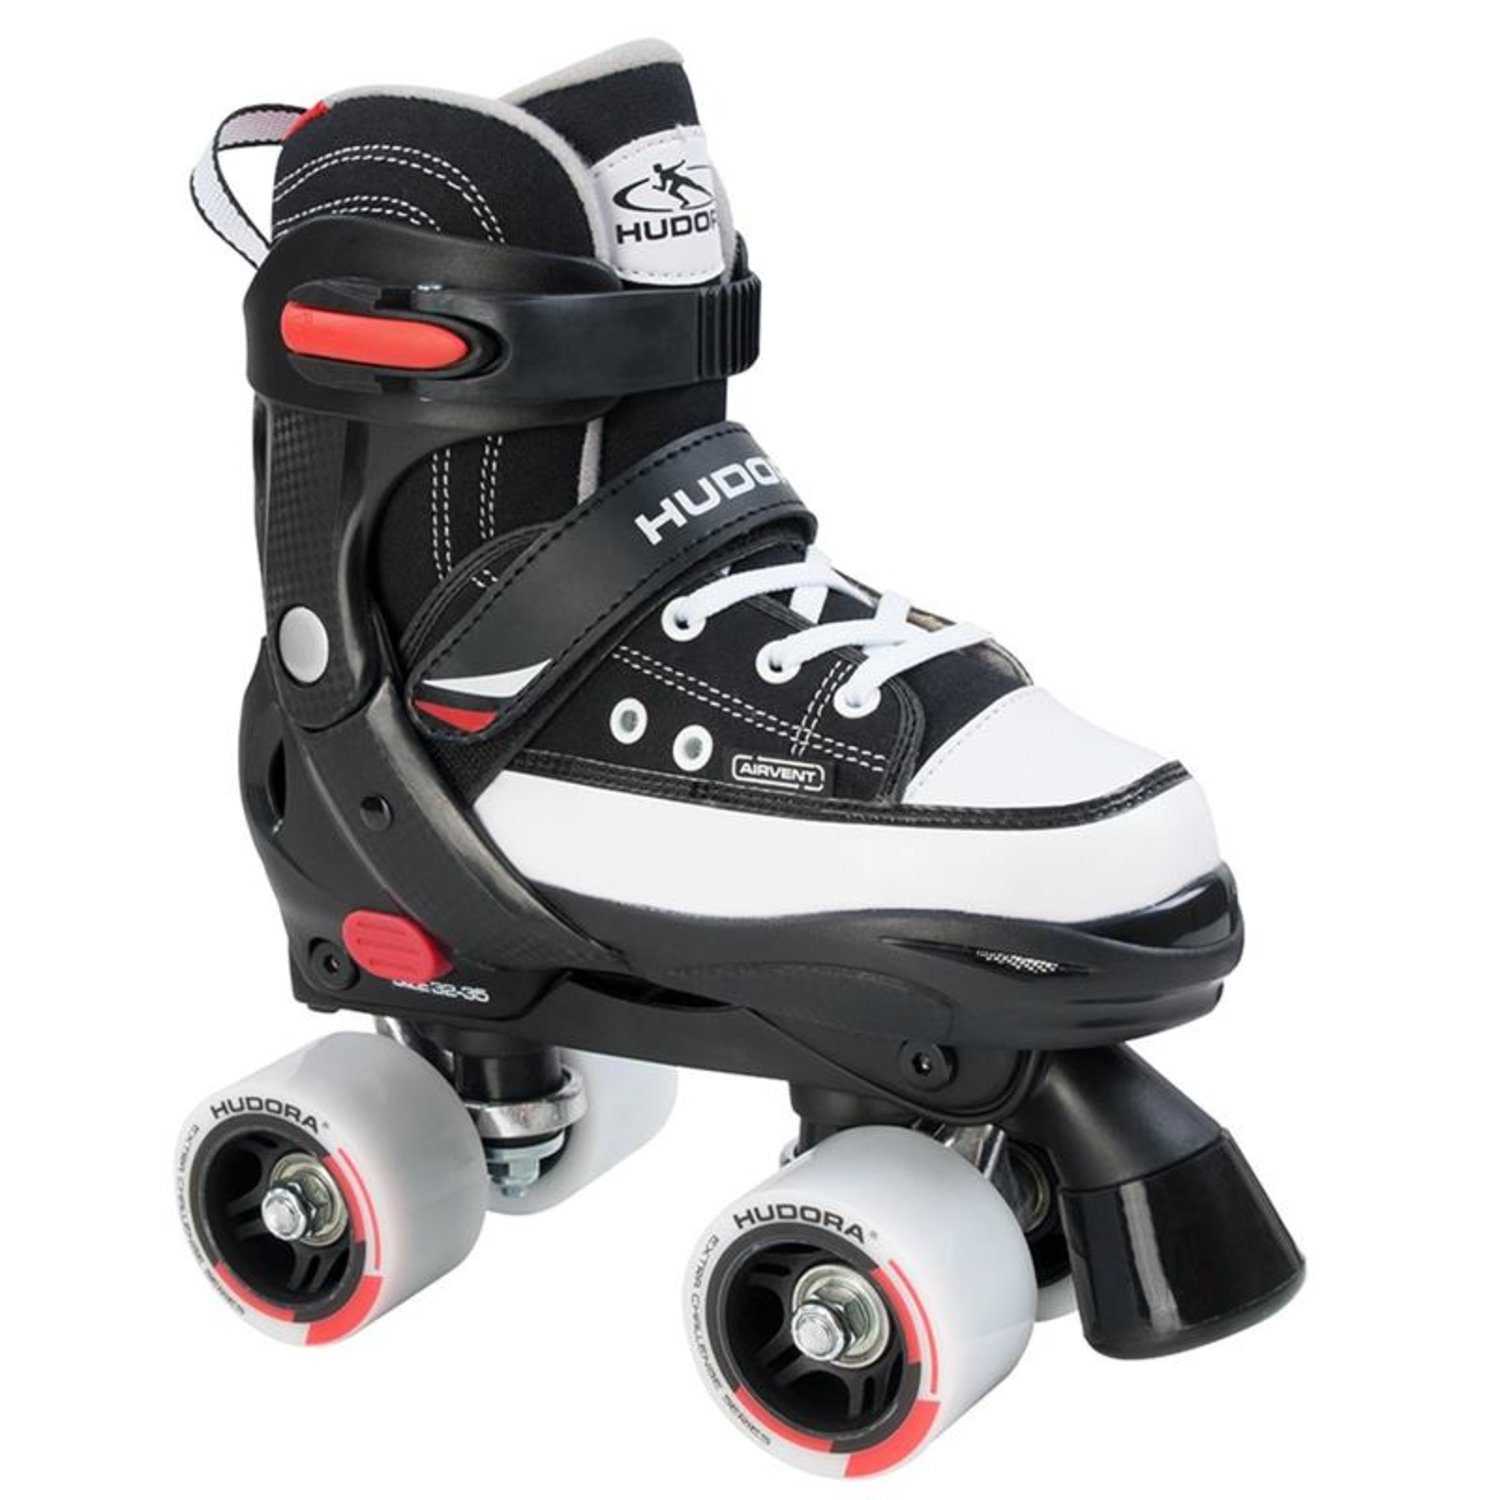 Hudora Inlineskates 22030 Roller Skate, verstellbar, Größe 28-31